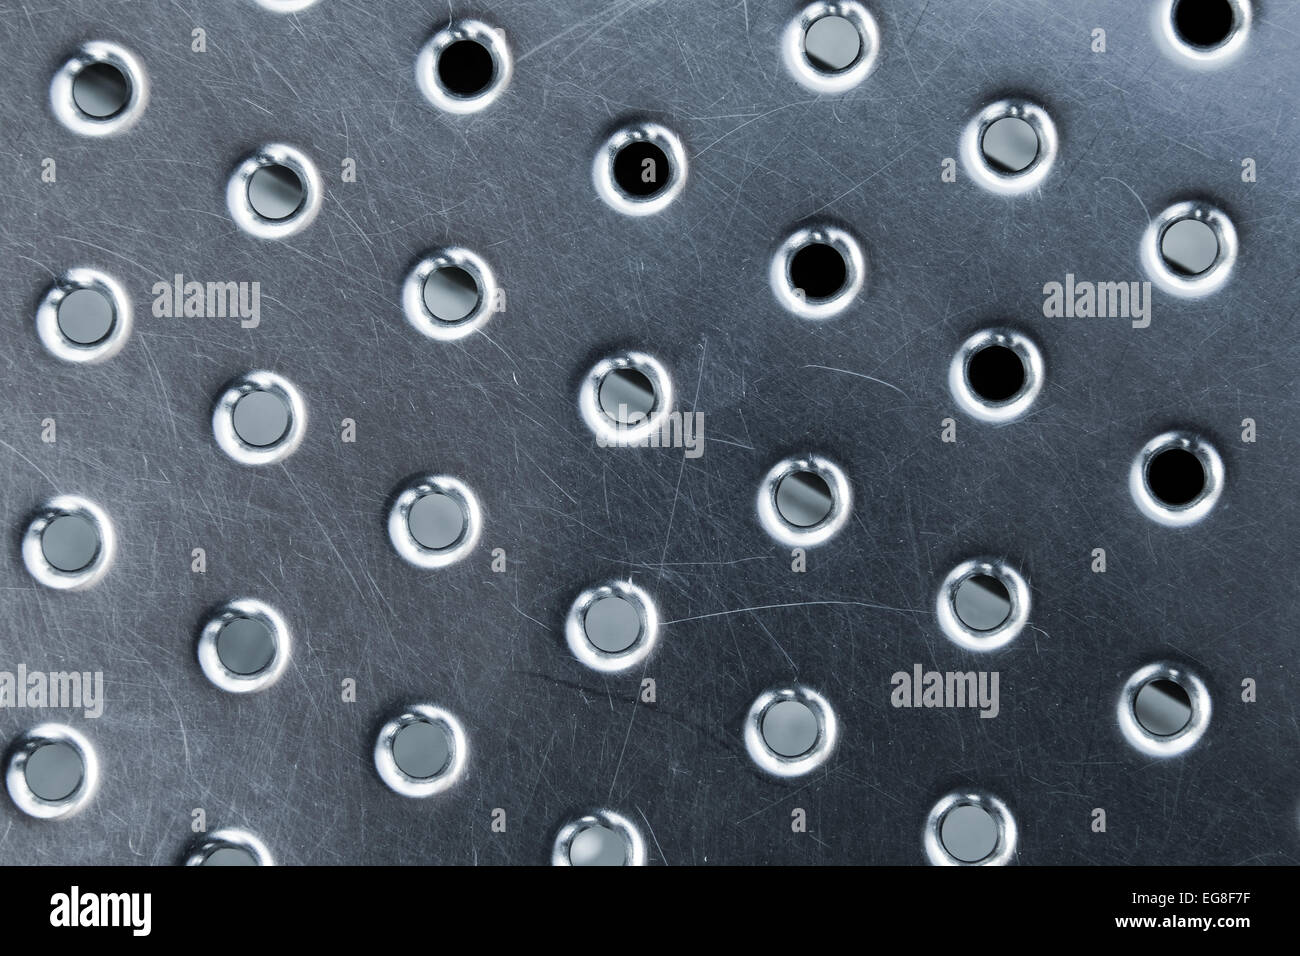 Metal sheet surface holes -Fotos und -Bildmaterial in hoher Auflösung –  Alamy